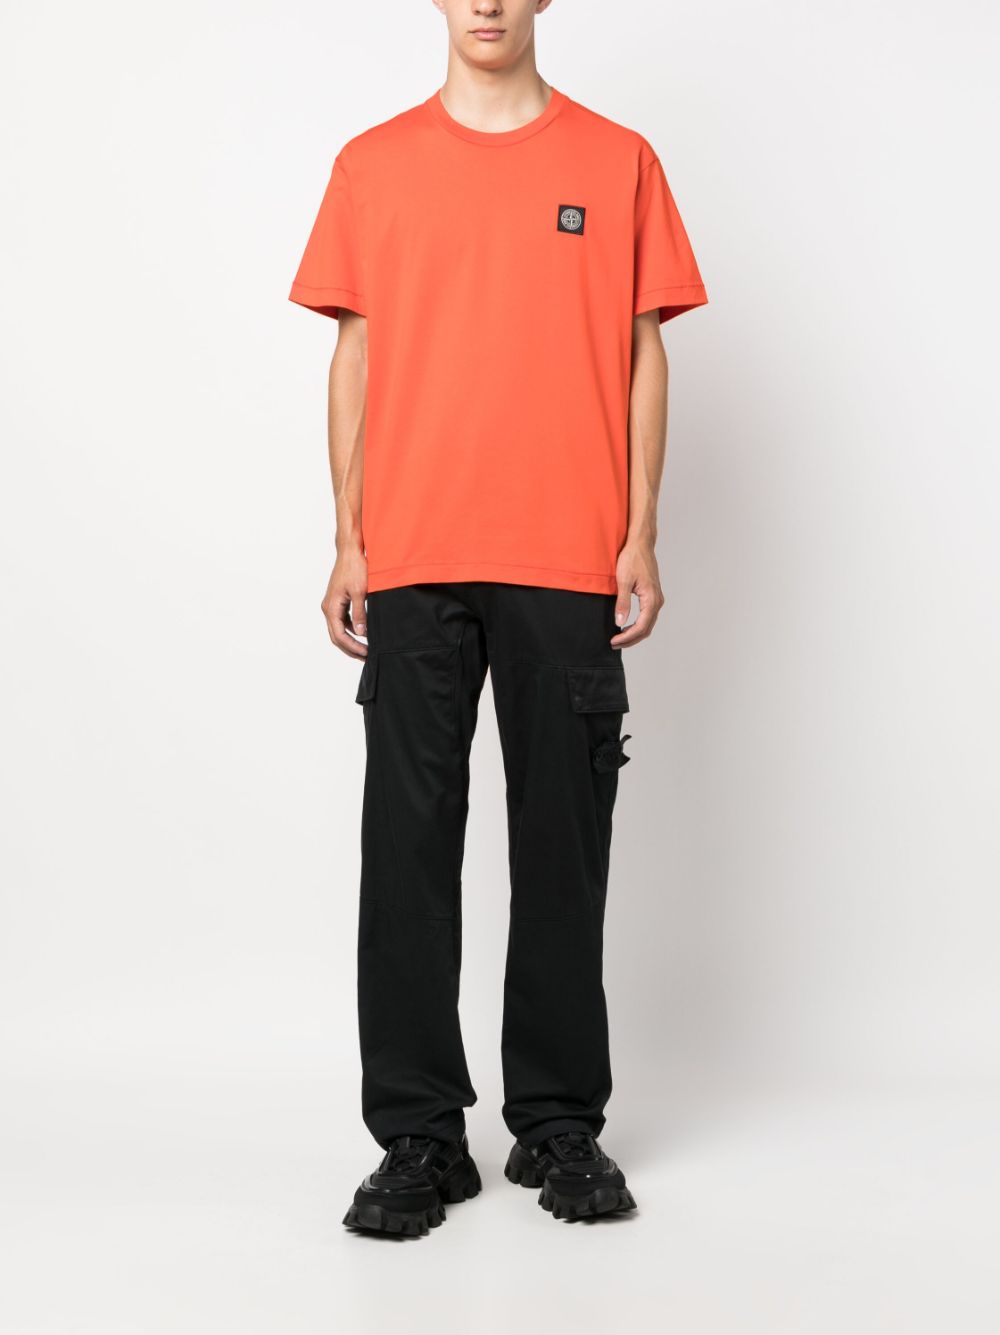 Stone Island T-shirt 24113 Orange Red - Lothaire